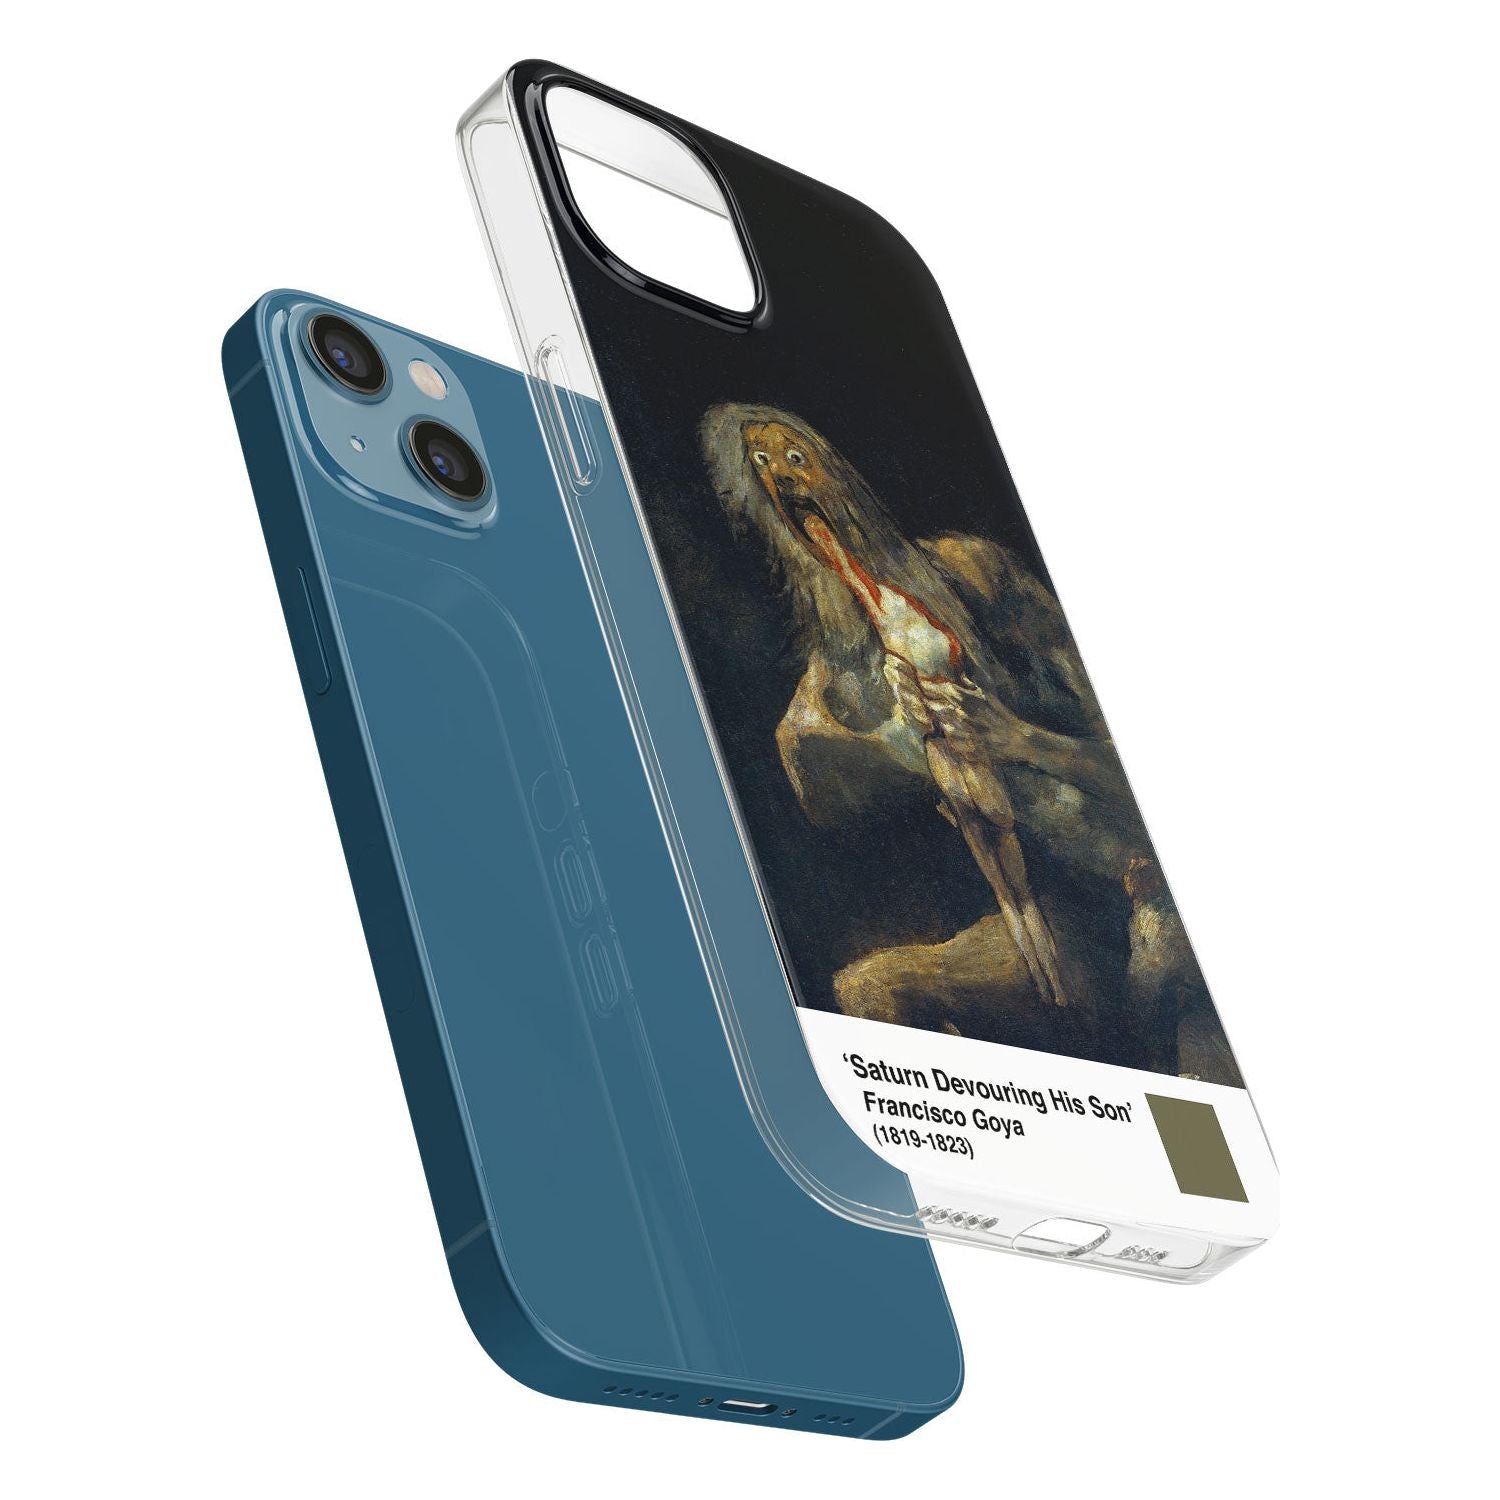 The Birth of VenusPhone Case for iPhone 13 Mini